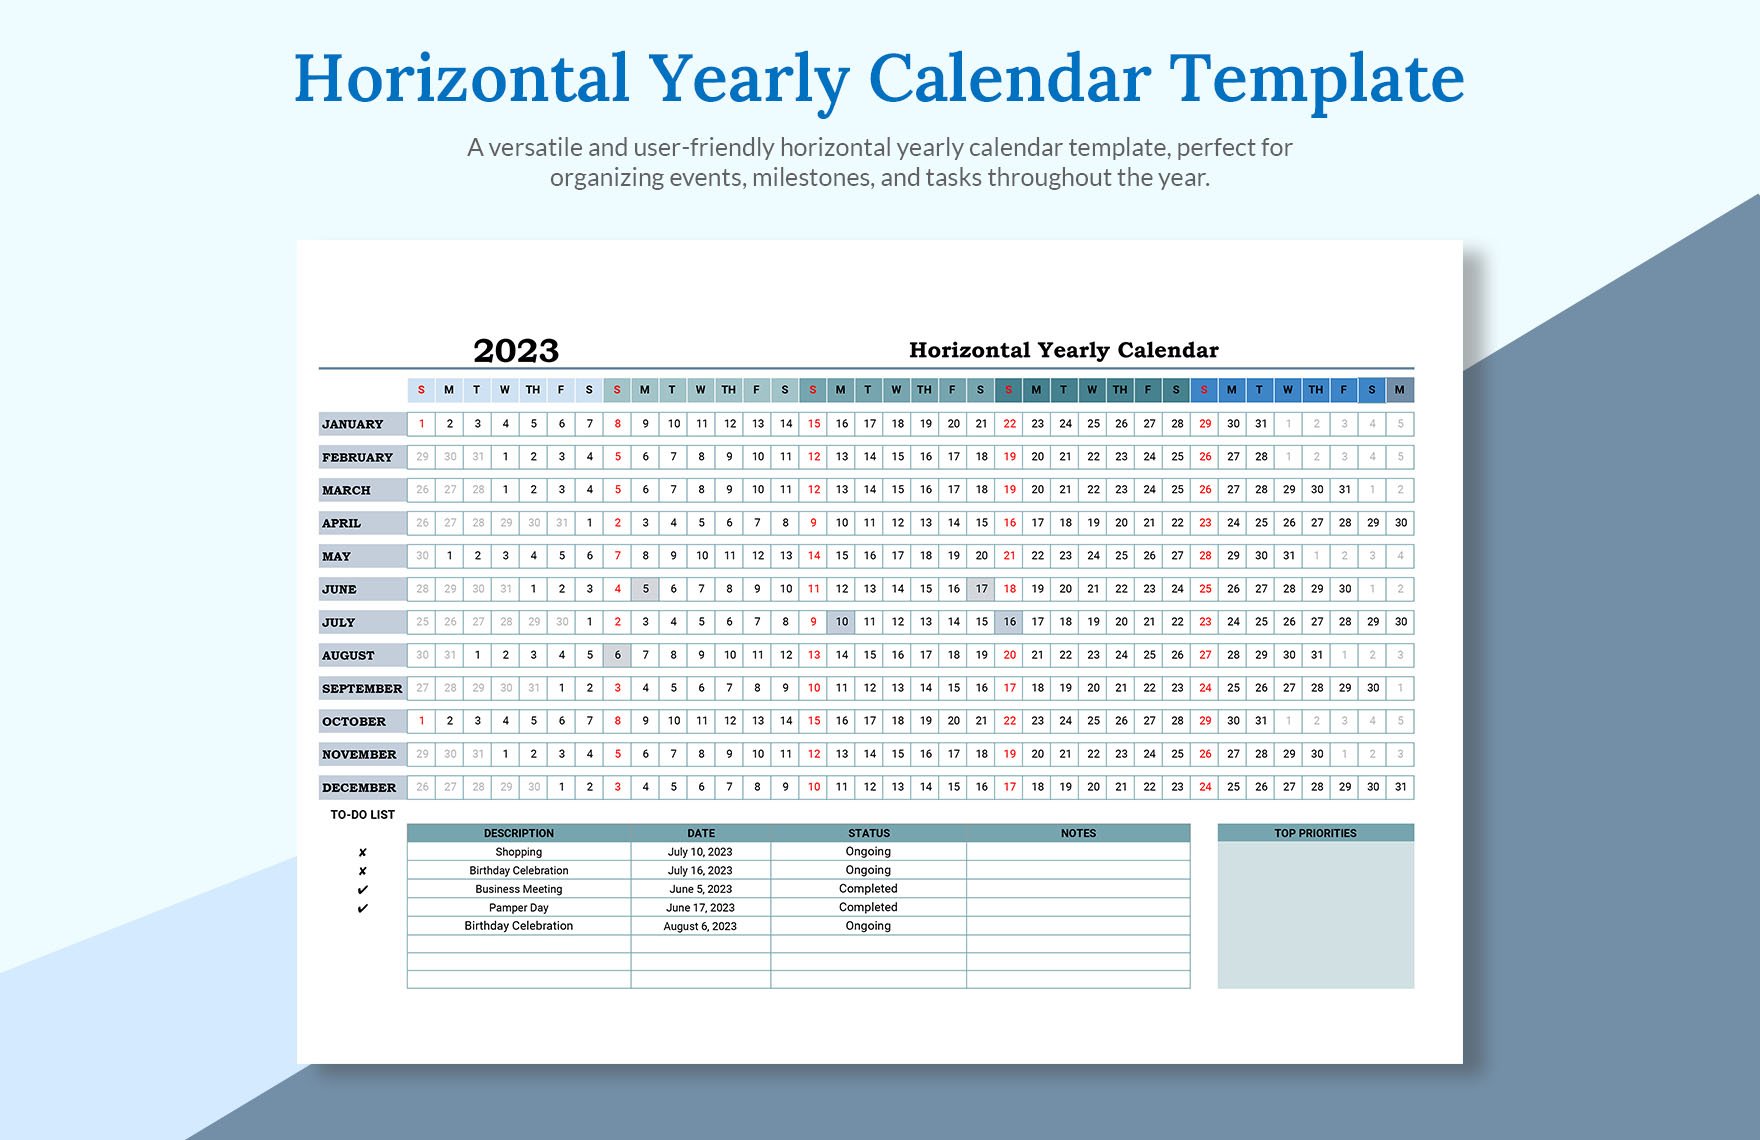 Horizontal Yearly Calendar Template